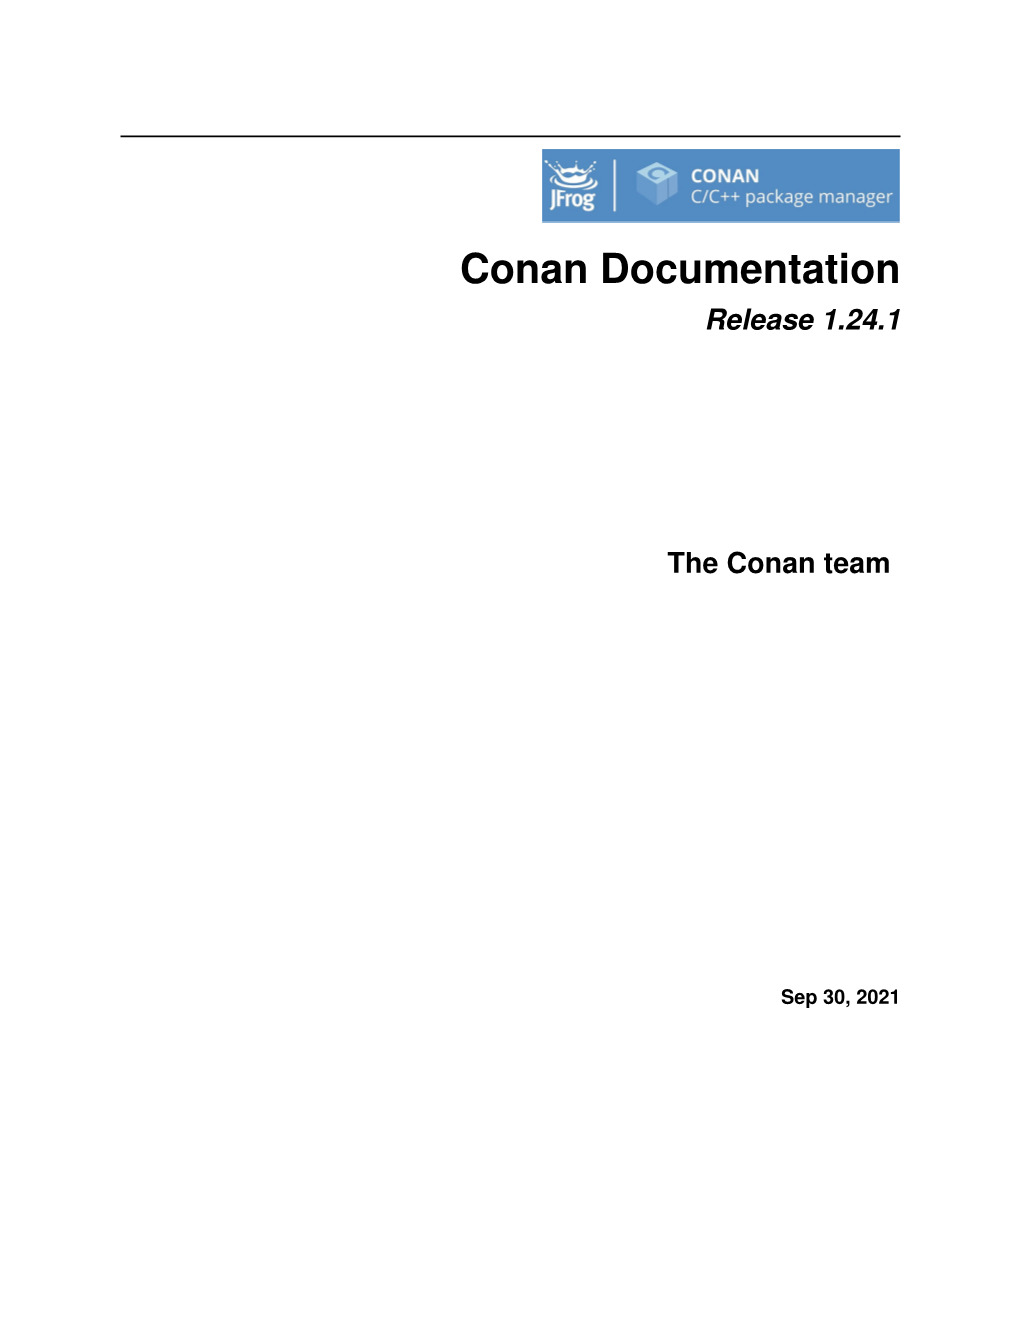 Conan Documentation Release 1.24.1